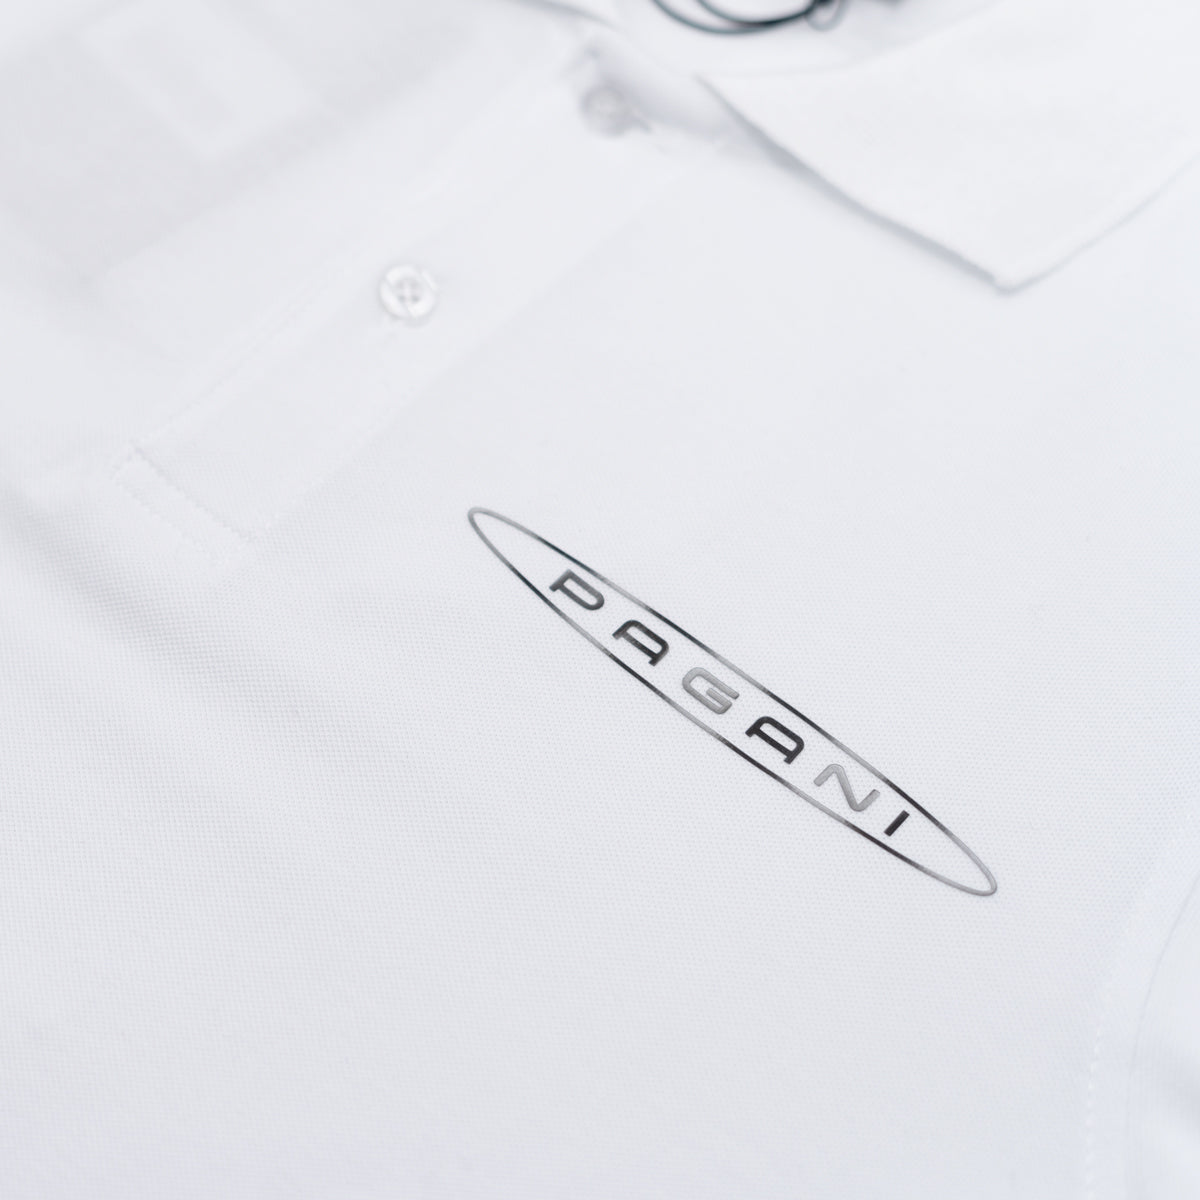 Men's basic polo shirt white | Team Collection